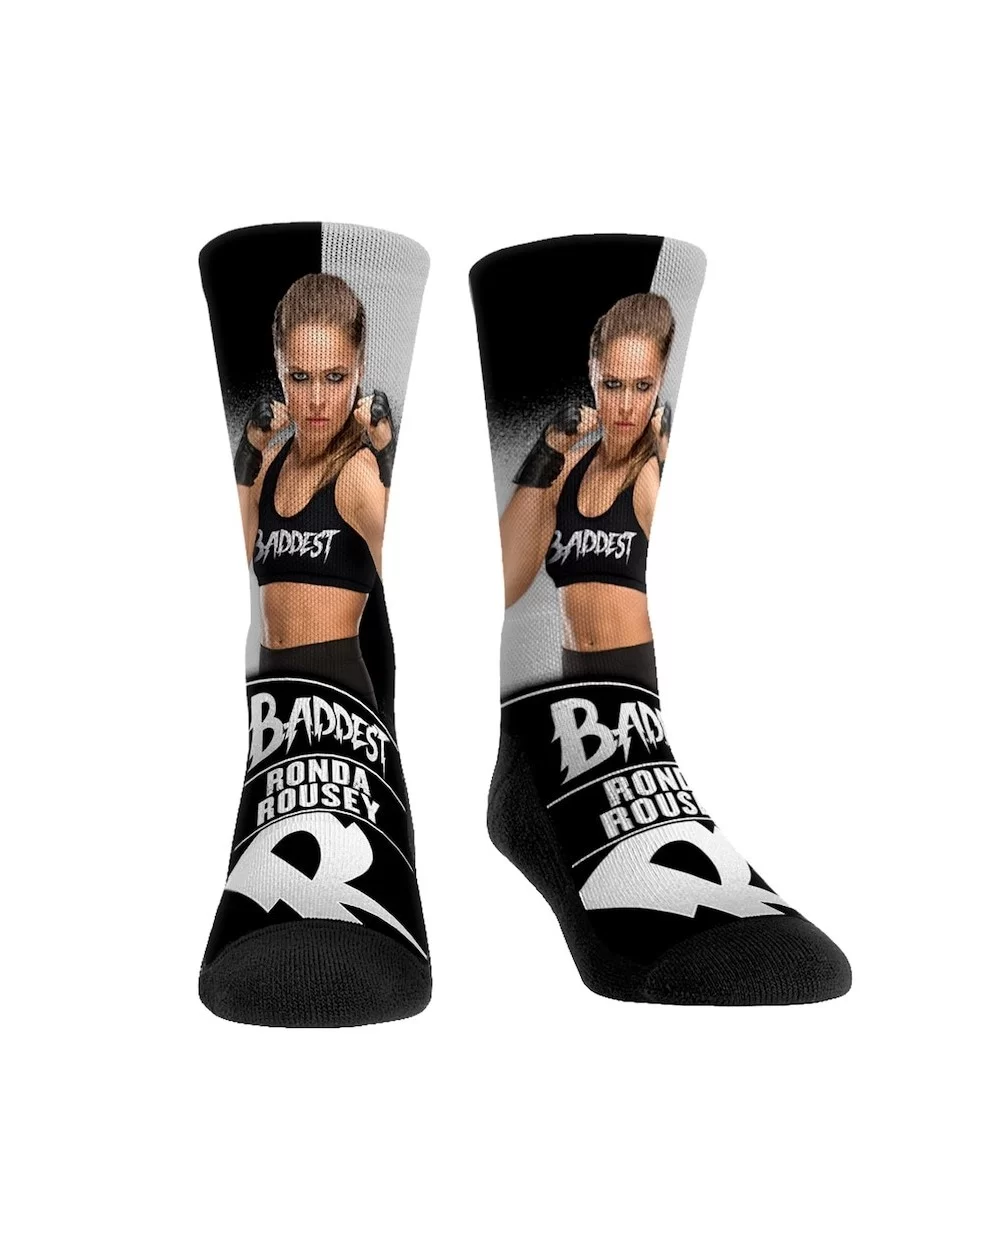 Unisex Rock Em Socks Ronda Rousey Stare Down Crew Socks $4.32 Apparel